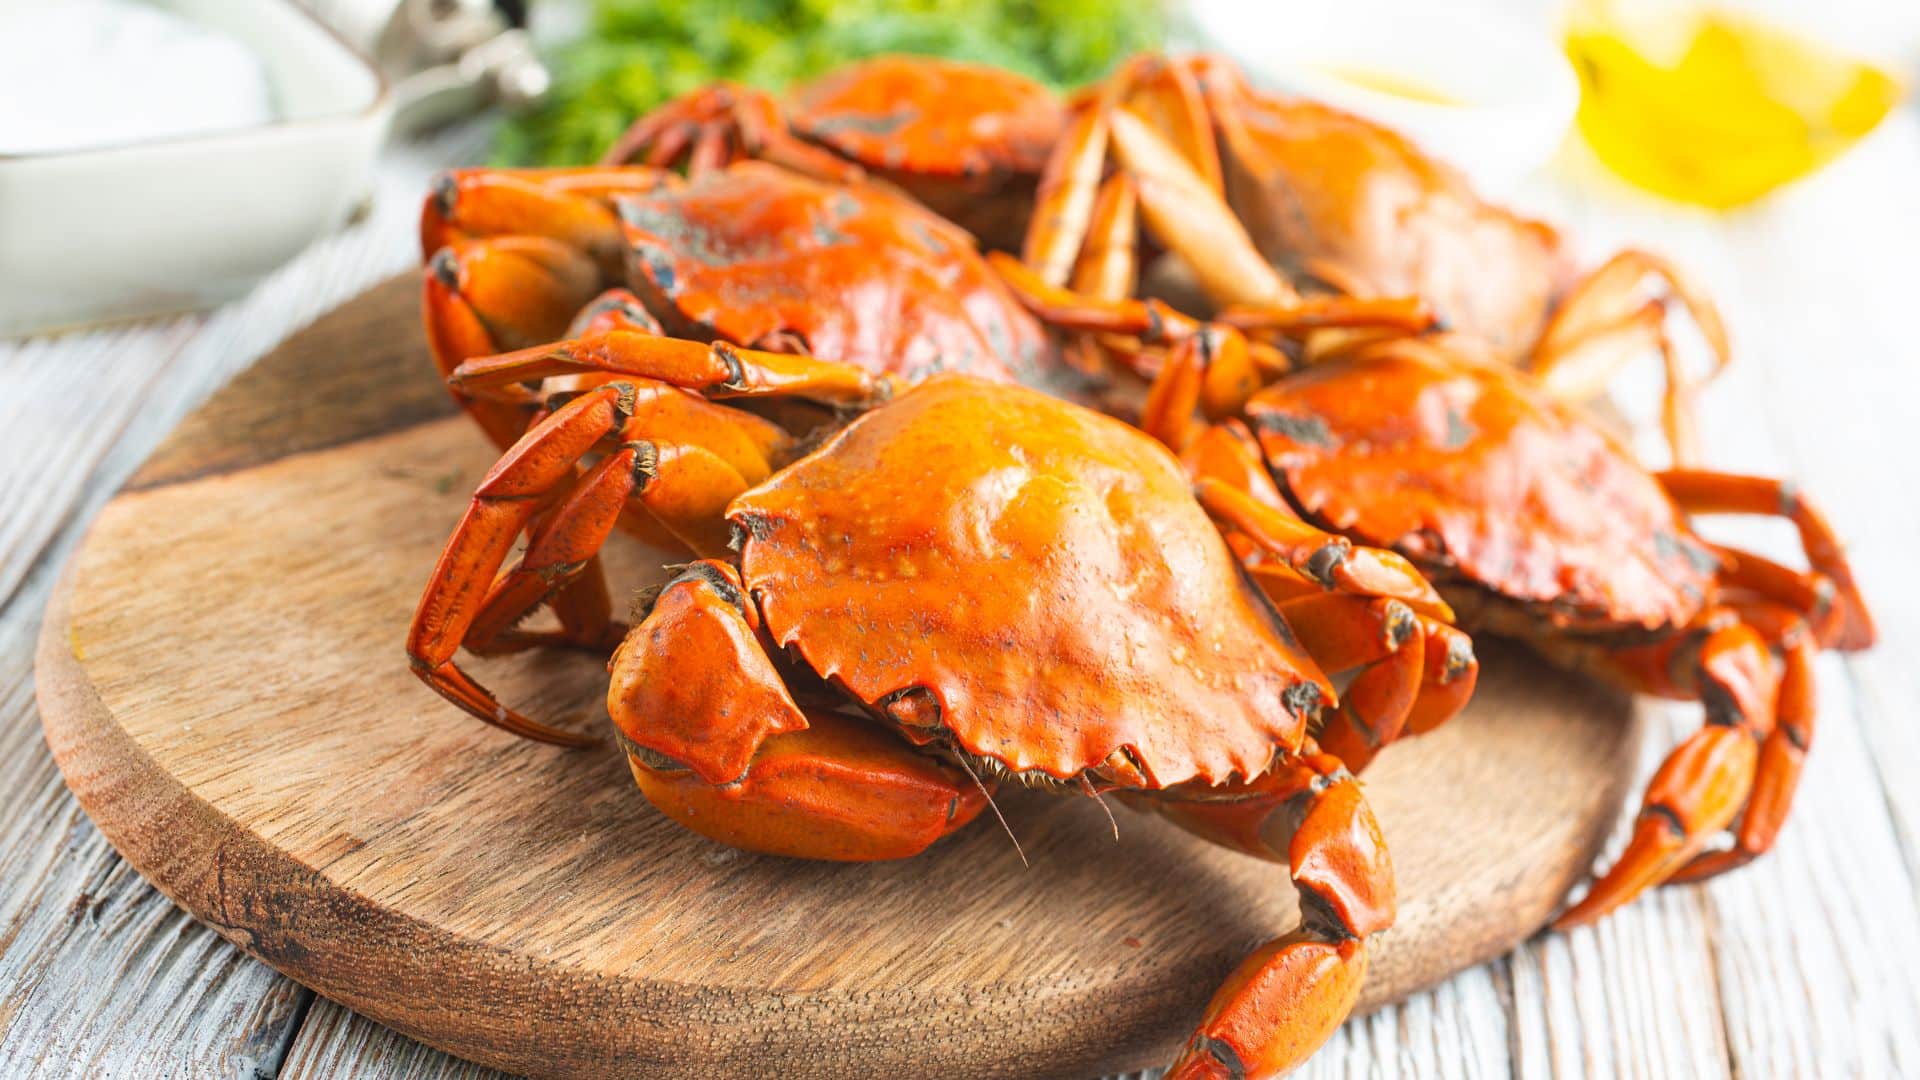 Several cooked hardshelled crabs on a wooden platter